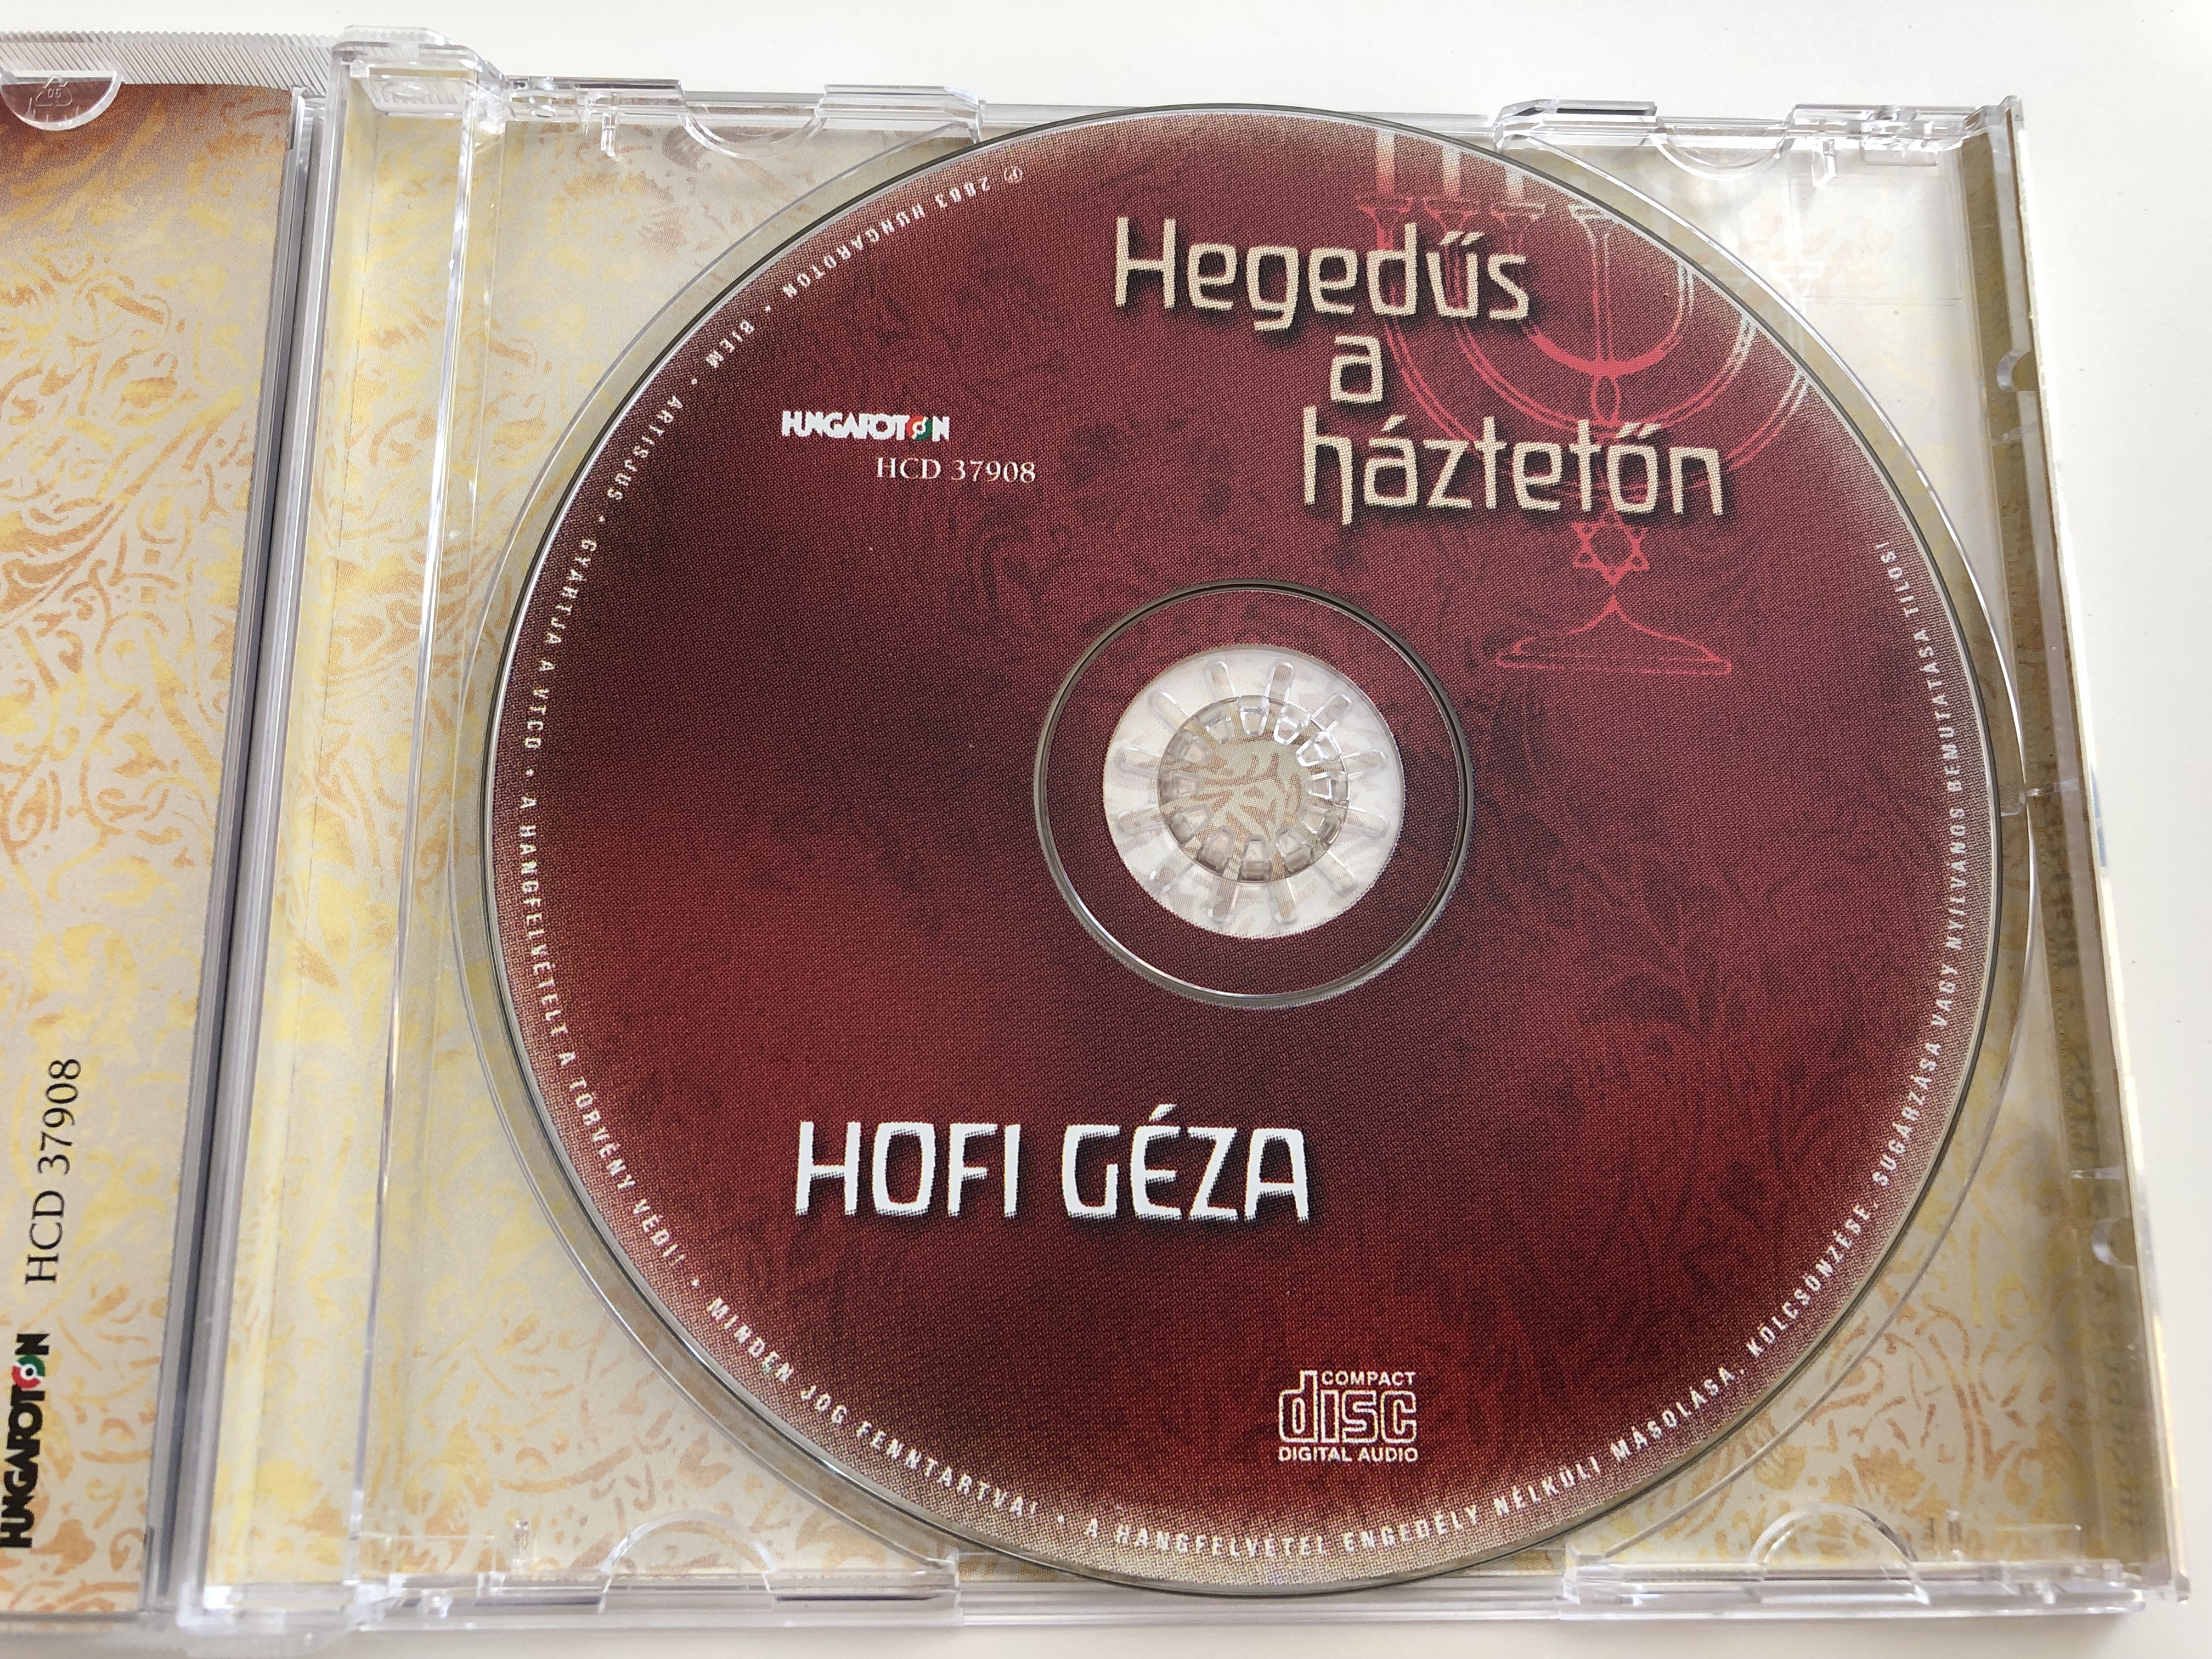 heged-s-a-h-ztet-n-fiddler-on-the-roof-hofi-g-za-cserh-ti-zsuzsa-zempl-ni-m-ria-musical-r-szletek-excerpts-from-the-musical-audio-cd-2003-hungaroton-hcd-37908-6-.jpg